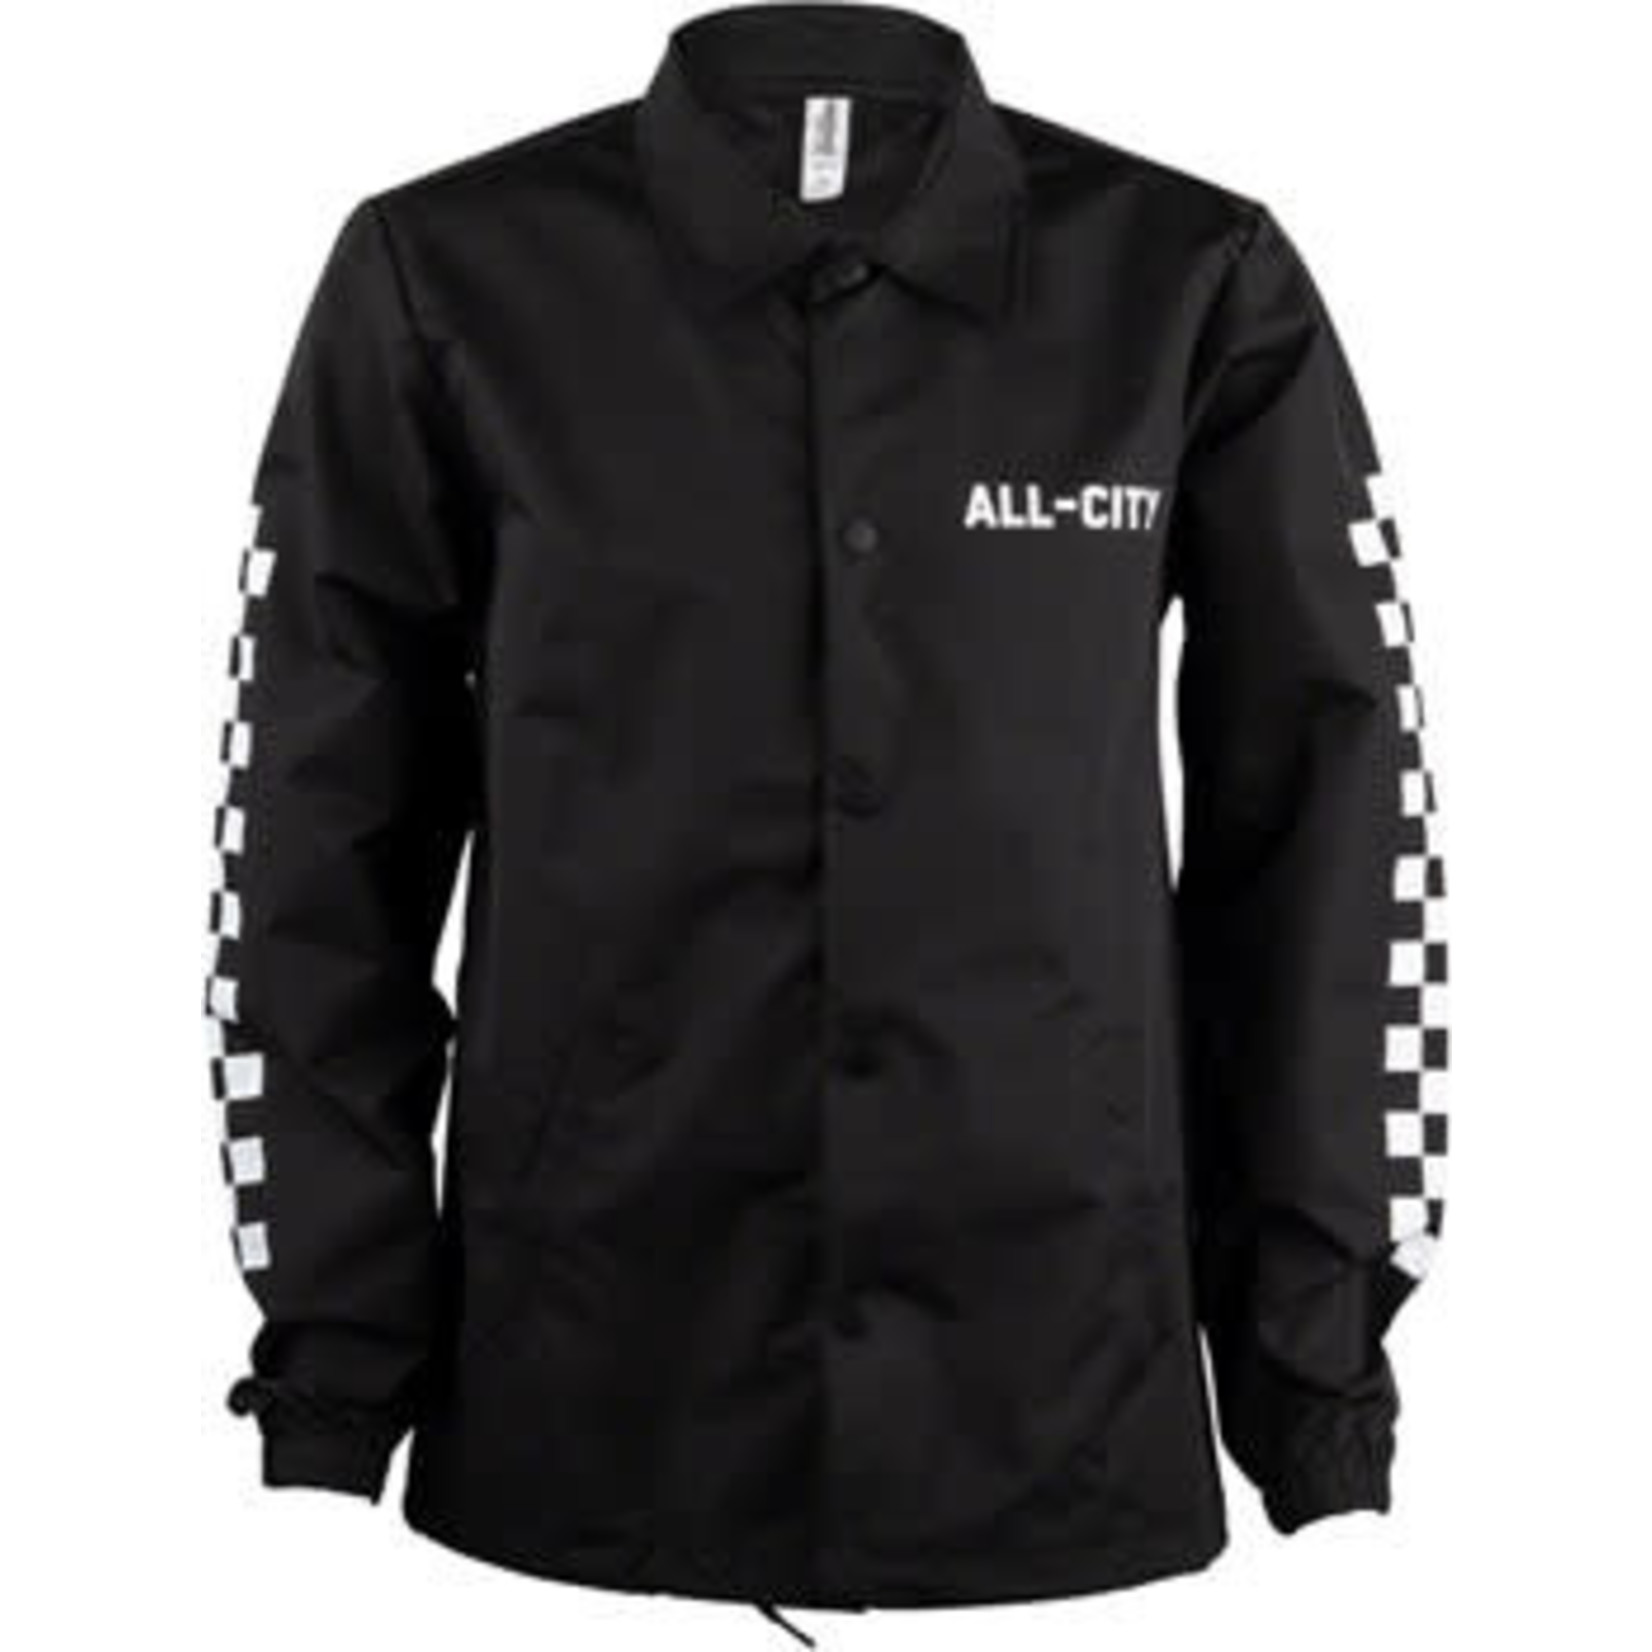 All-City All City Tu Tone Jacket - White, Black, Medium